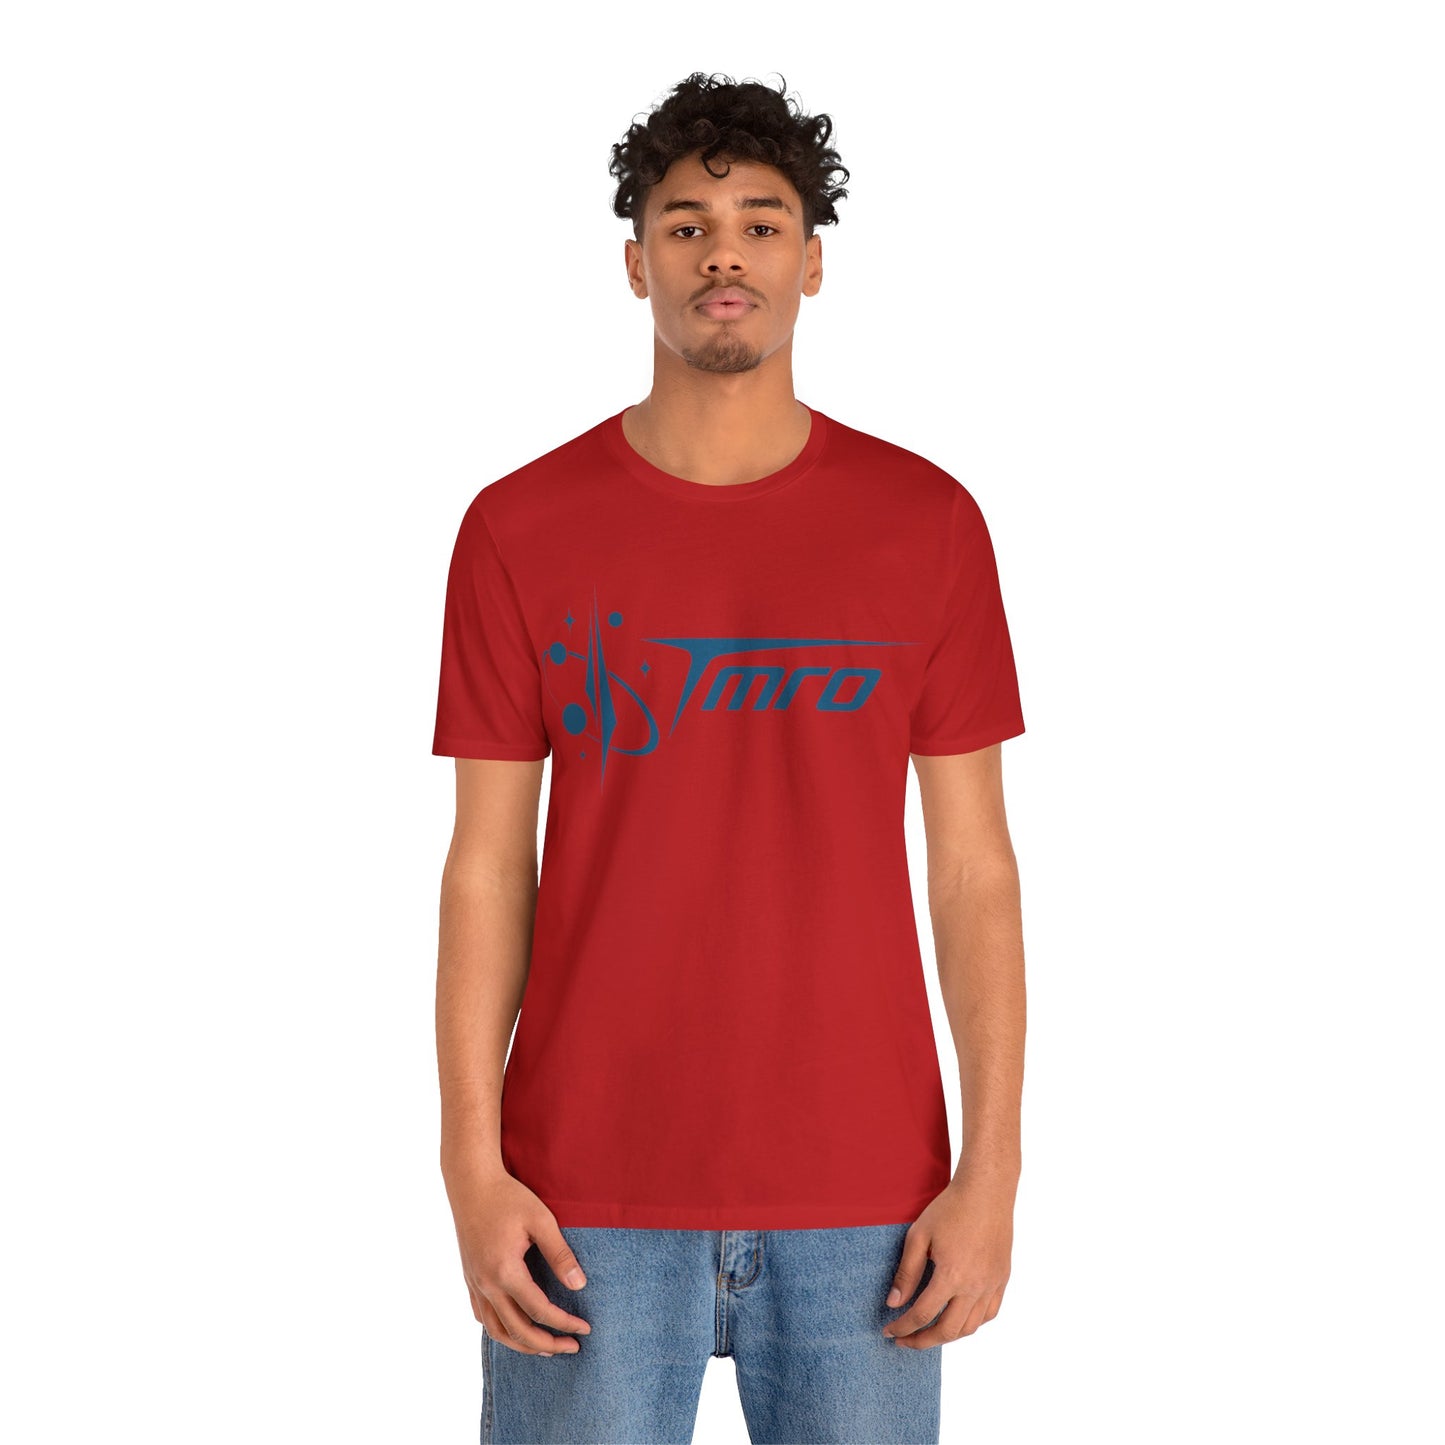 TMRO - Blue Logo - T-shirt - US